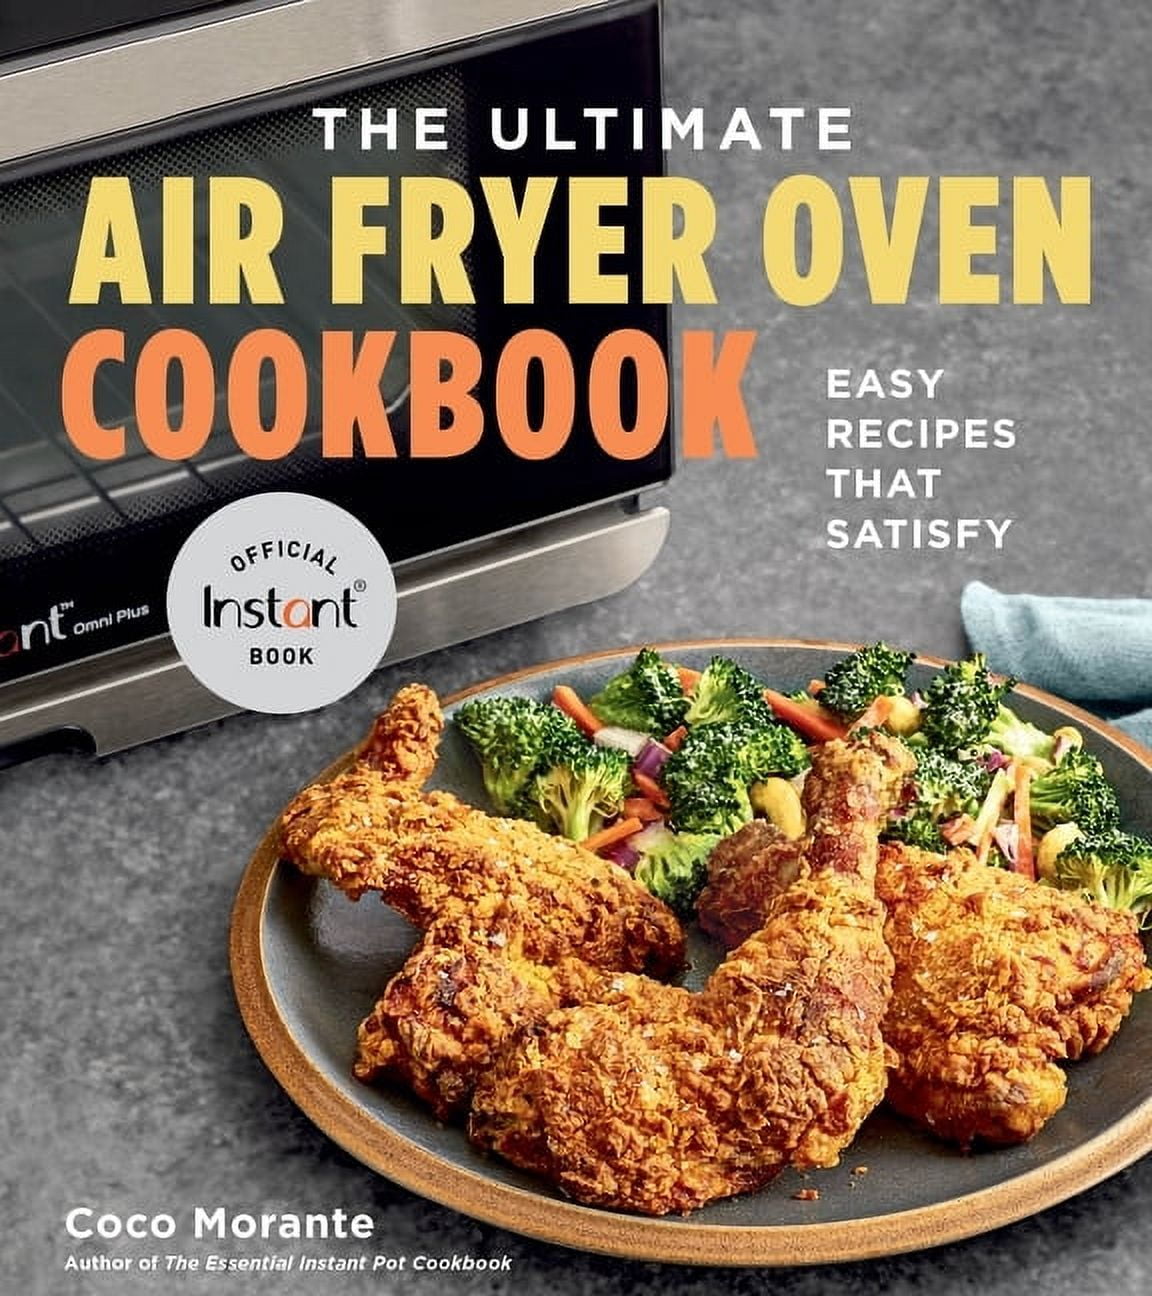 Innsky Air Fryer Oven Cookbook: Crispy, Easy, and Delicious Innsky Air Fryer  Oven Recipes for Smart People (Paperback)